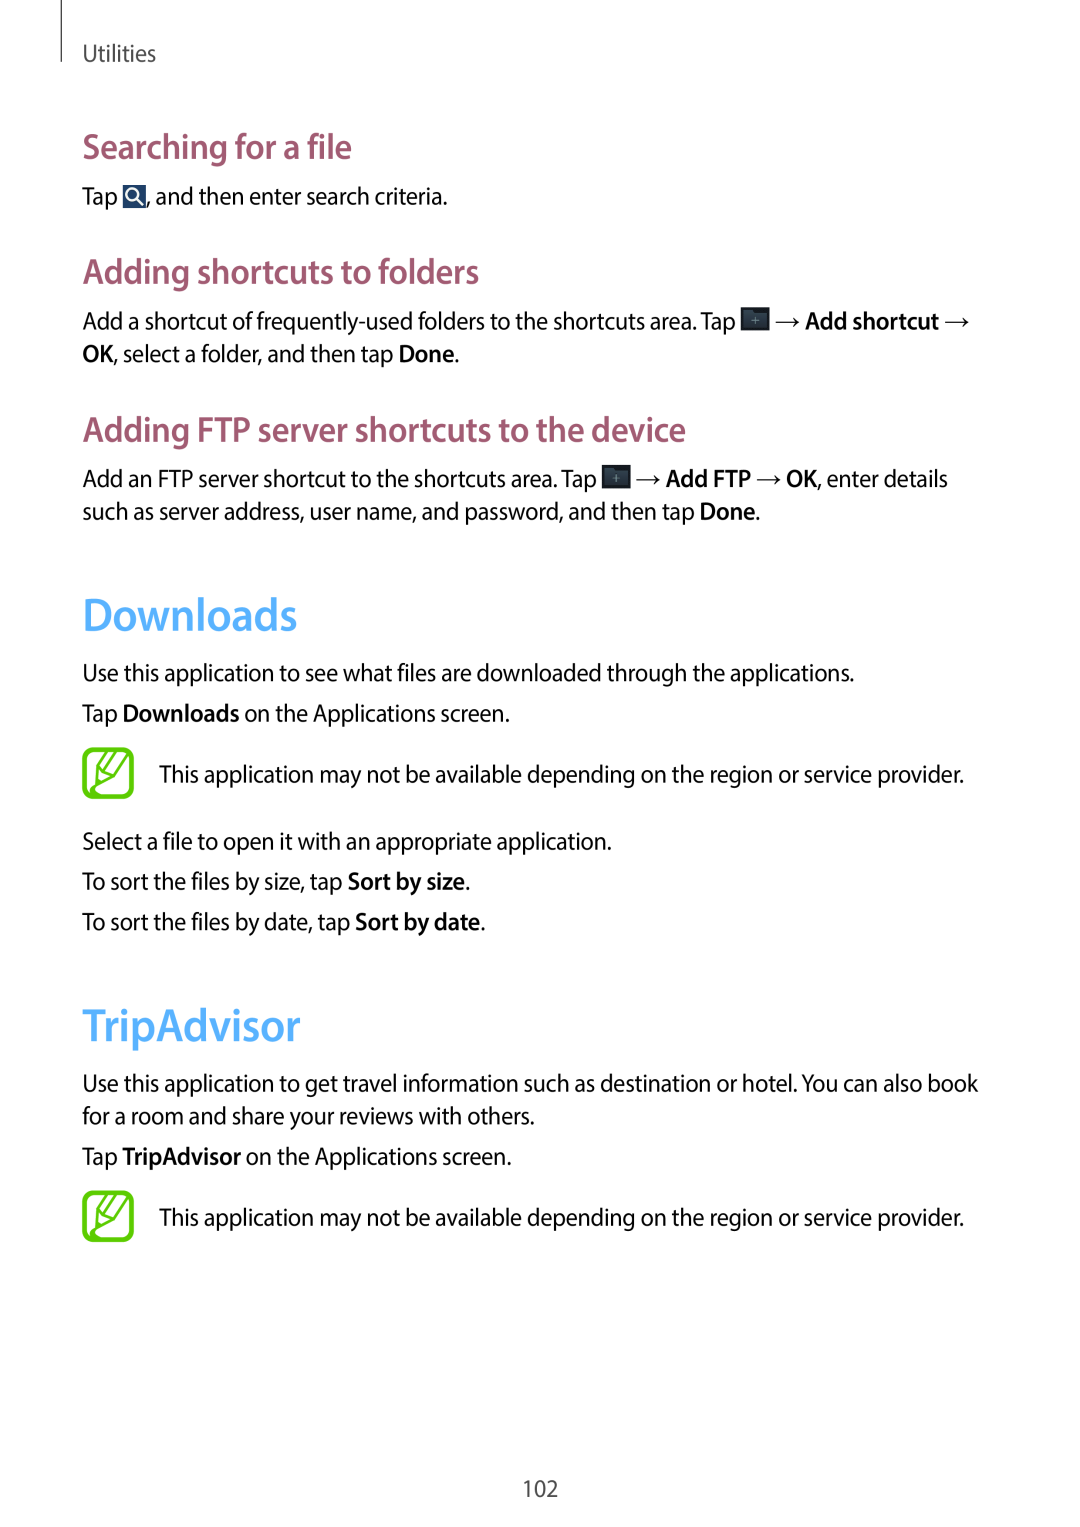 Samsung SM-G7105ZWACOA manual Downloads, TripAdvisor, Searching for a file, Adding shortcuts to folders, Utilities 